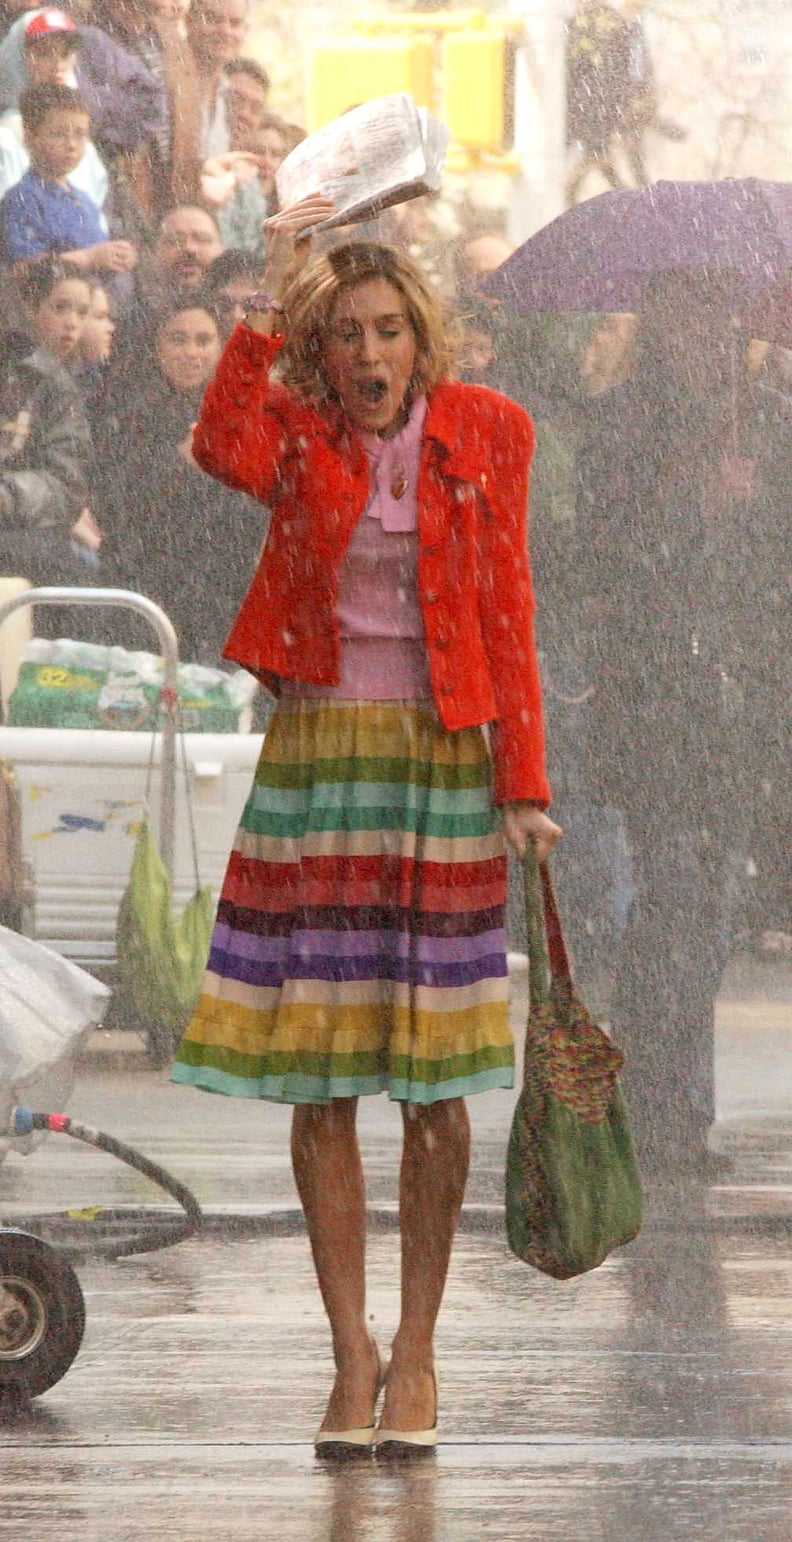 That rainbow skirt